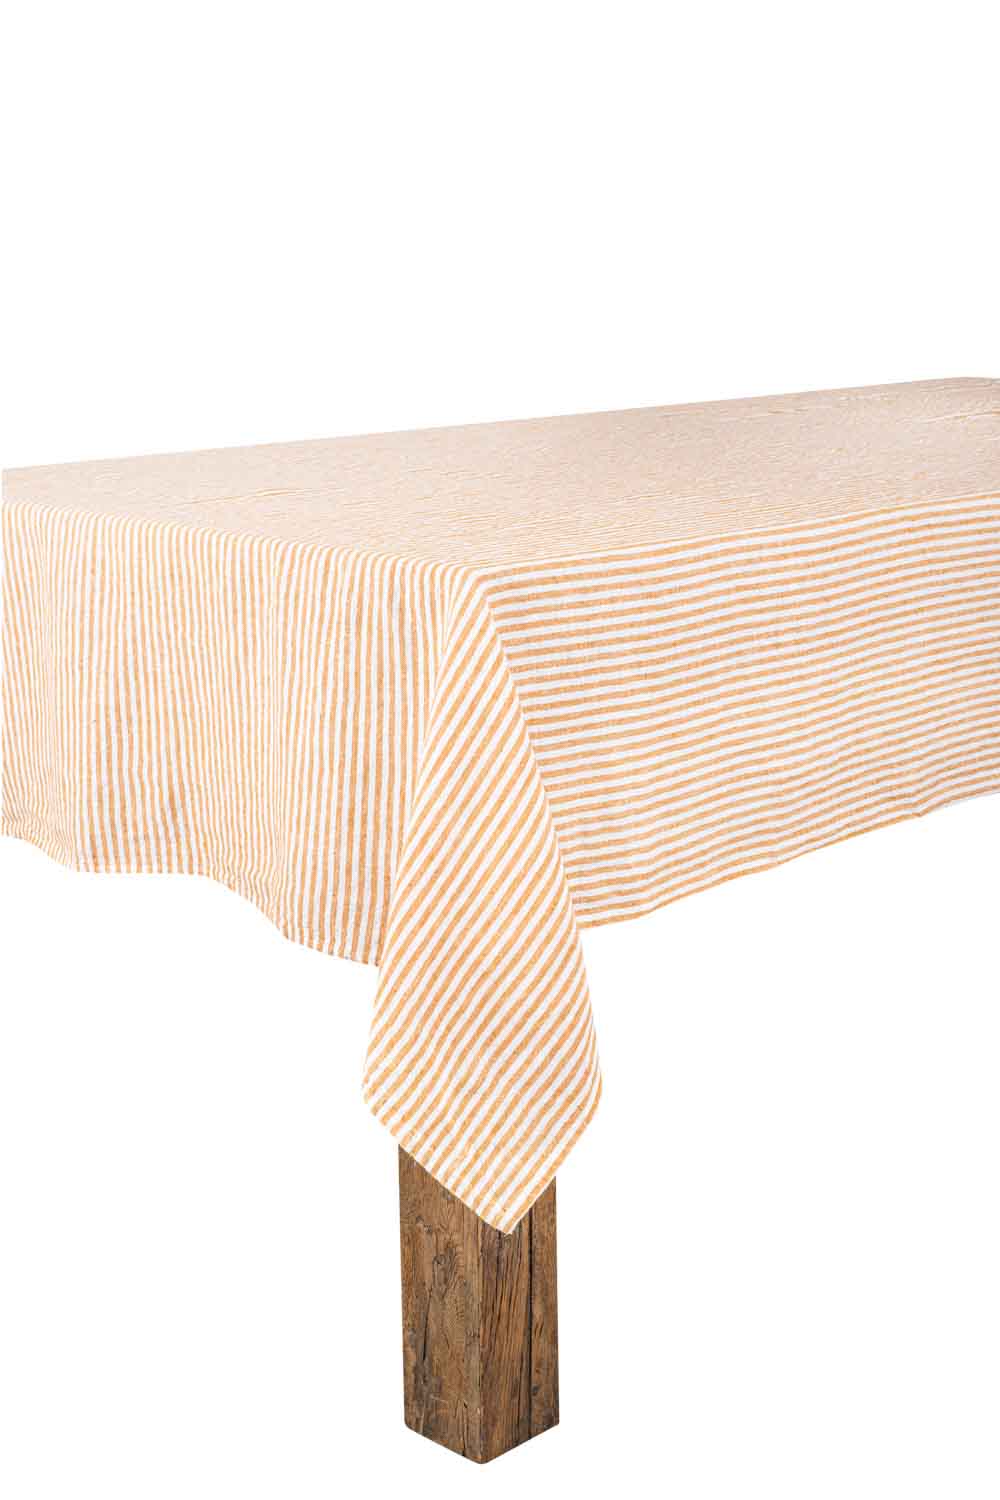 Vezzani square washed linen tablecloth 160x160 cm - Harmony Haomy